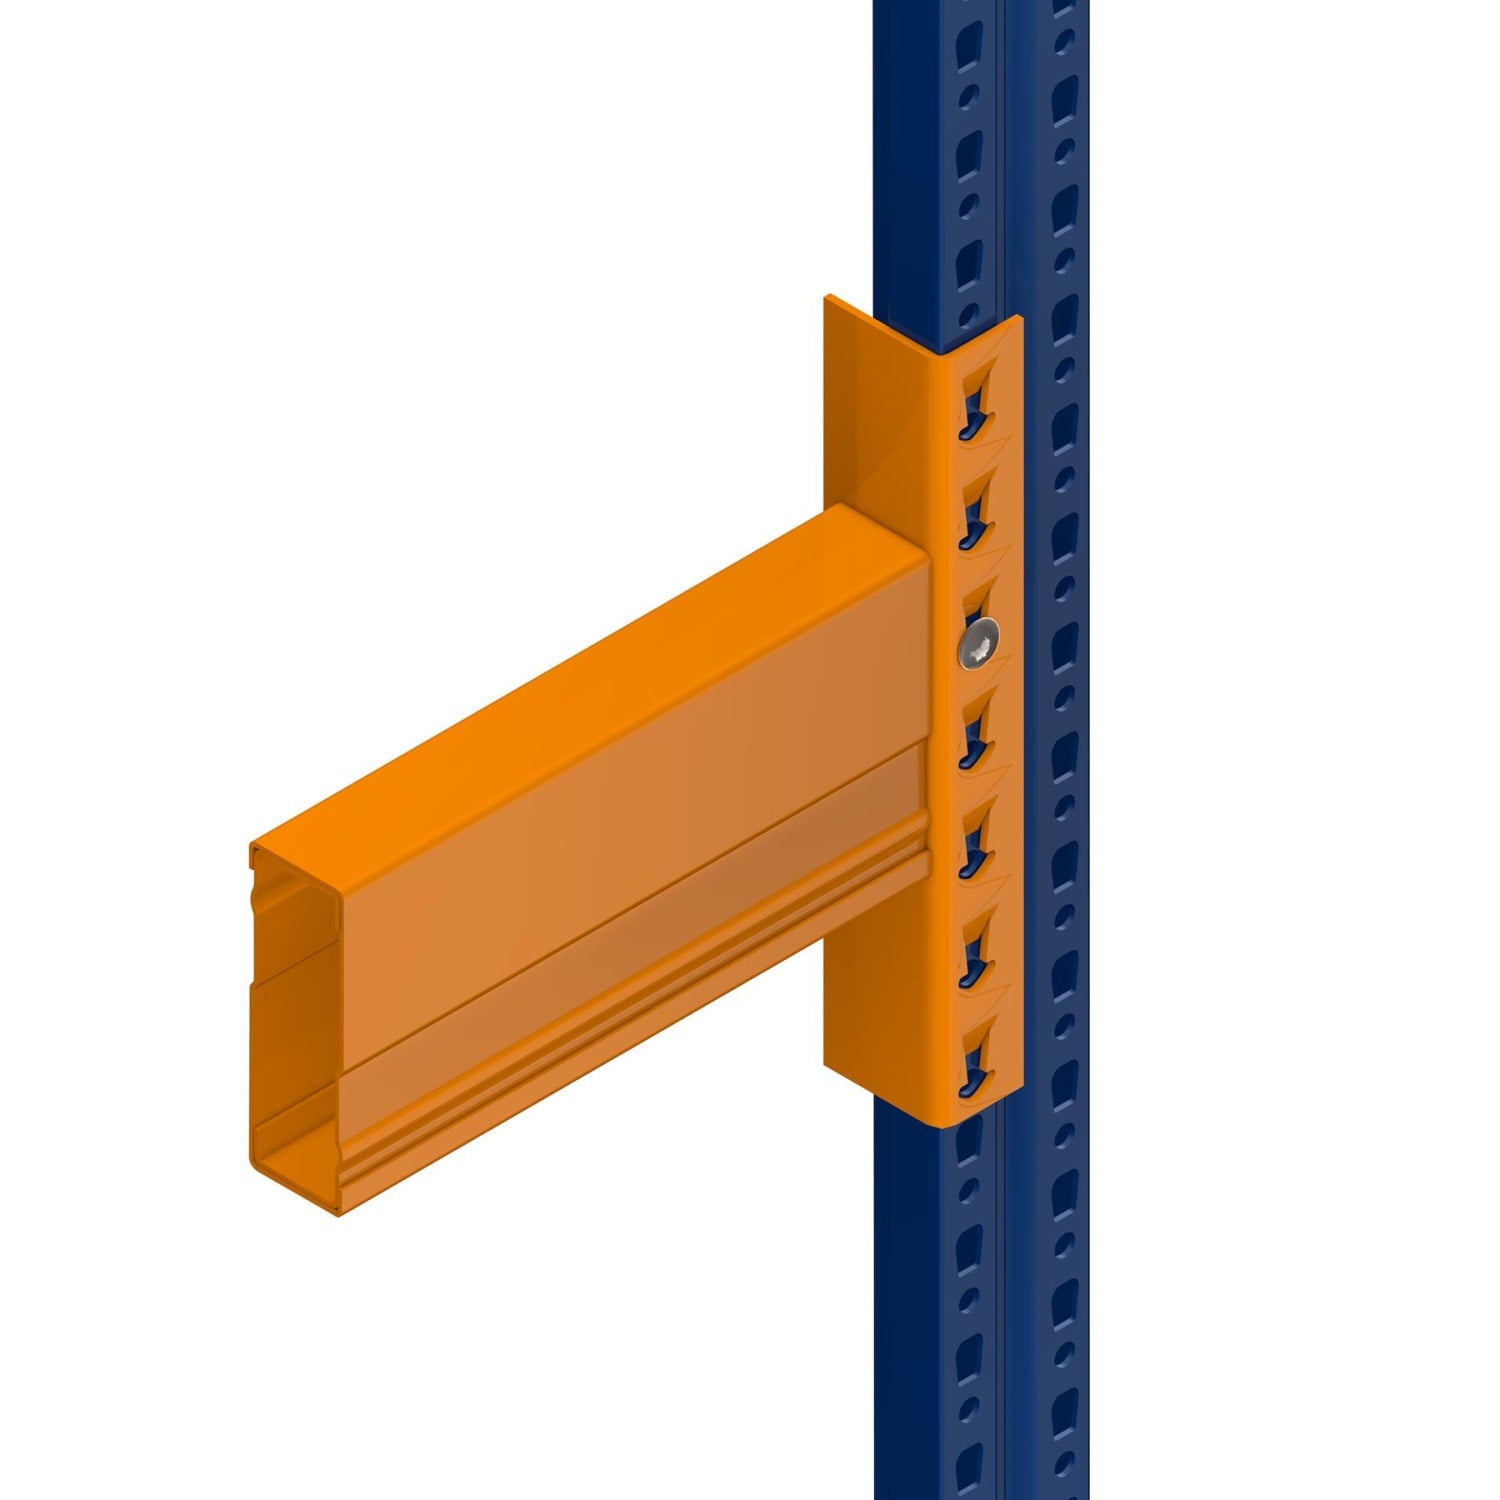 Kleine palletstelling van 3 m x 2,90 m (LxH) met 3 niveaus voor 12 opslagplekken